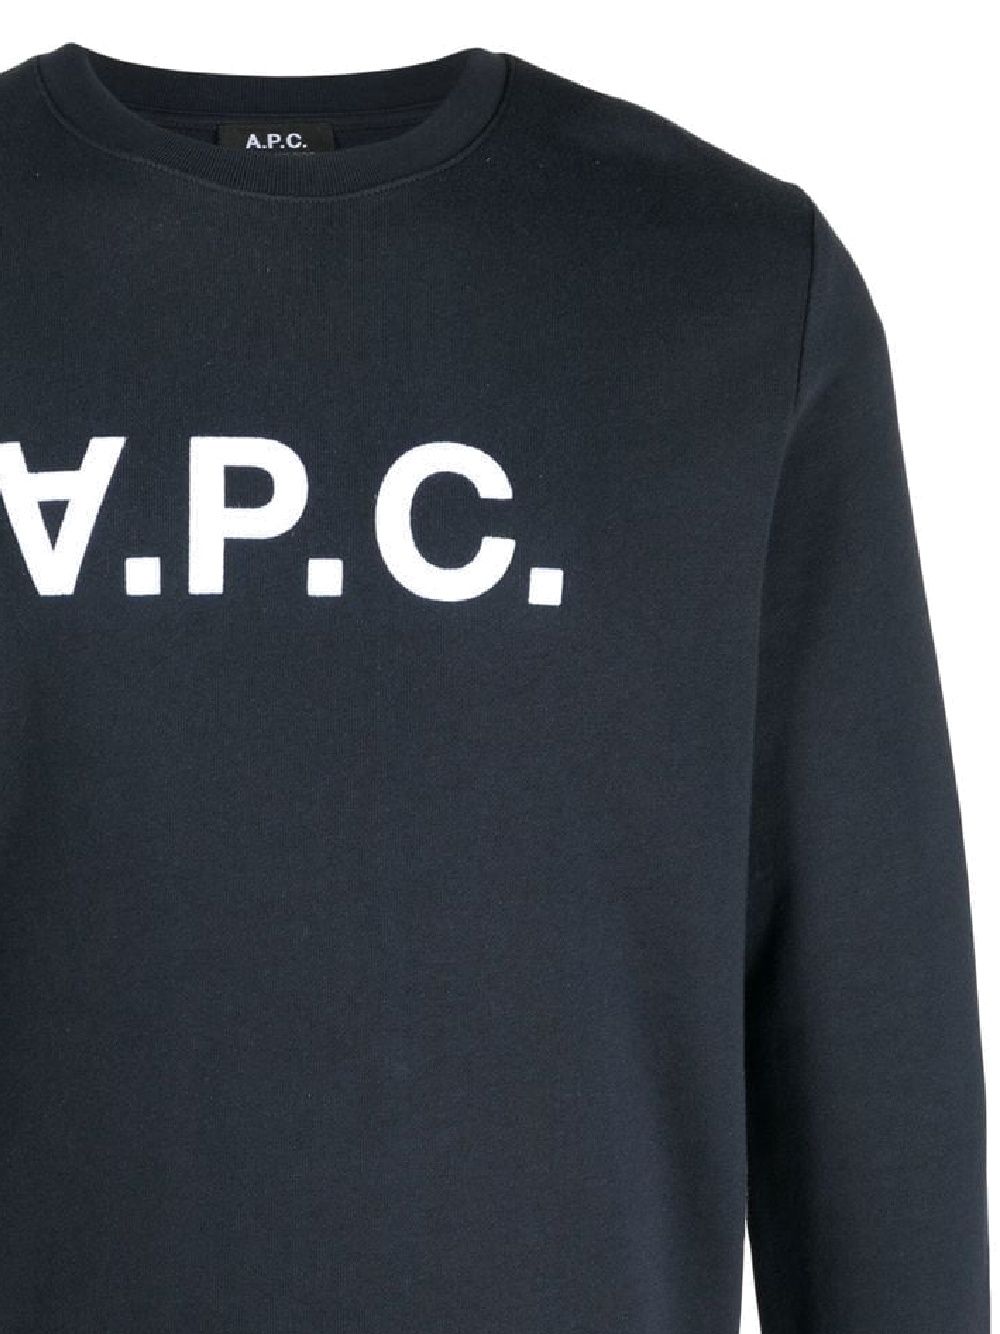 VPC cotton sweatshirt with logo print